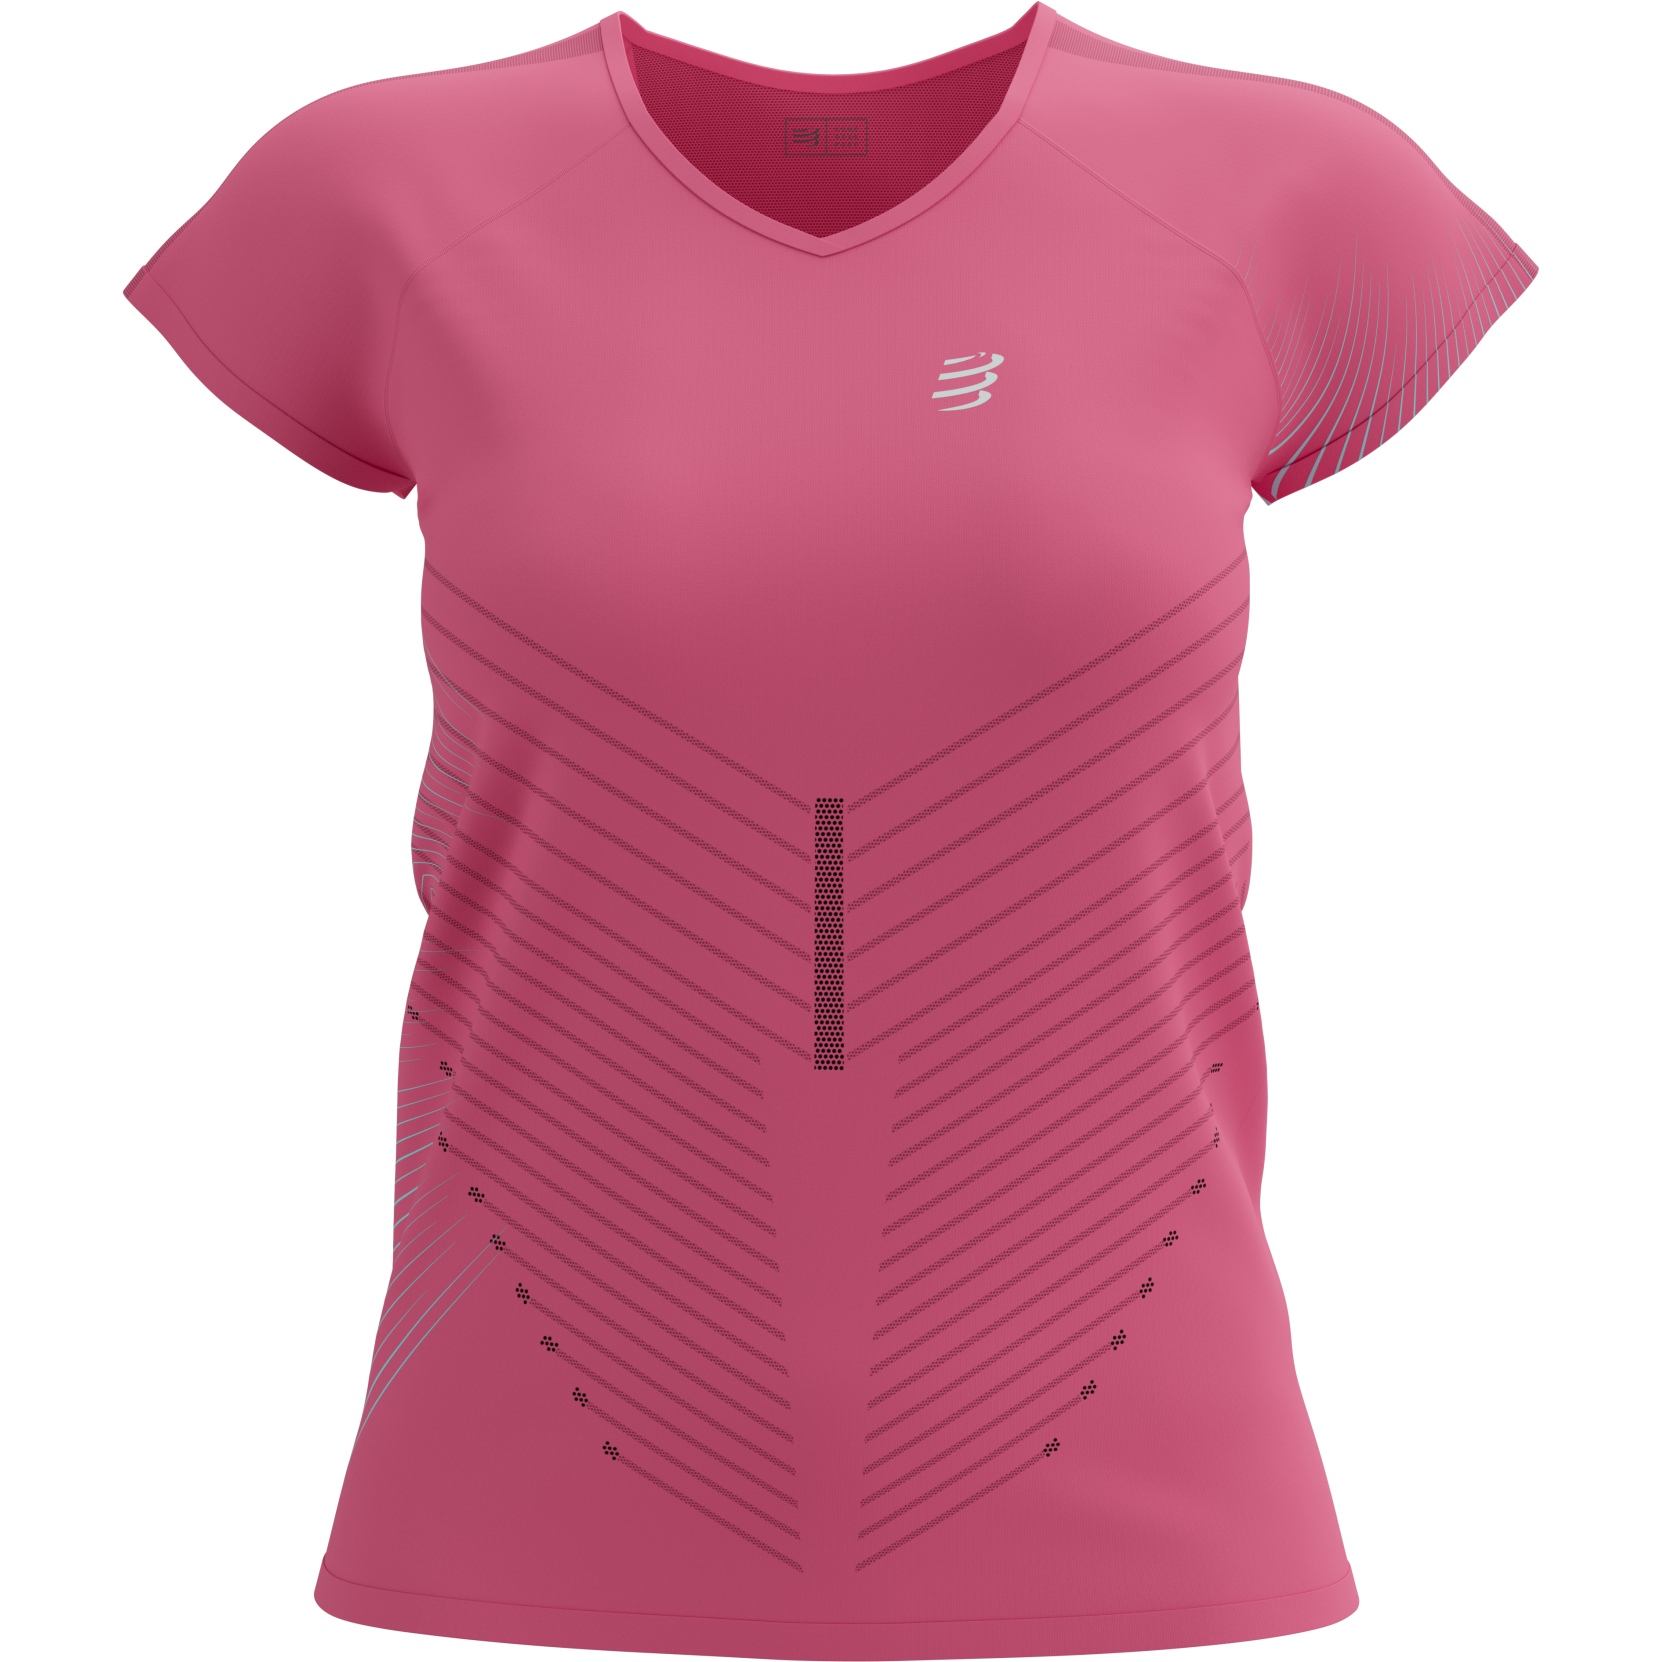 Bild von Compressport Performance T-Shirt Damen - hot pink/aqua